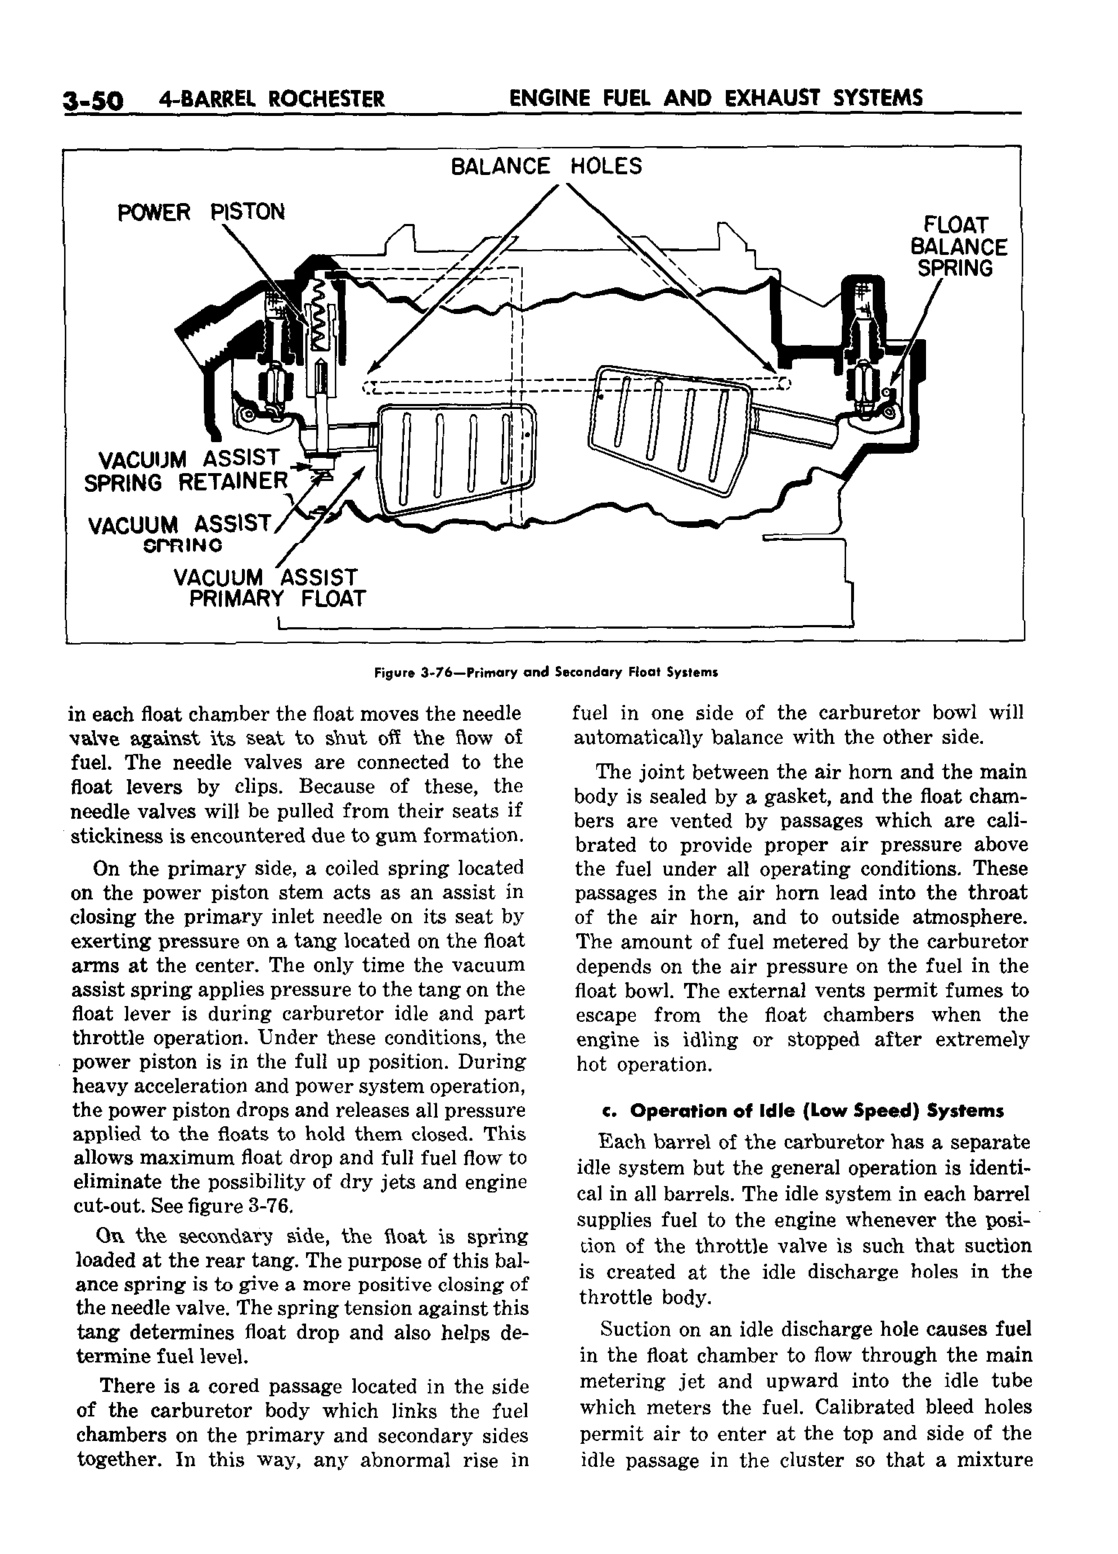 n_04 1959 Buick Shop Manual - Engine Fuel & Exhaust-050-050.jpg